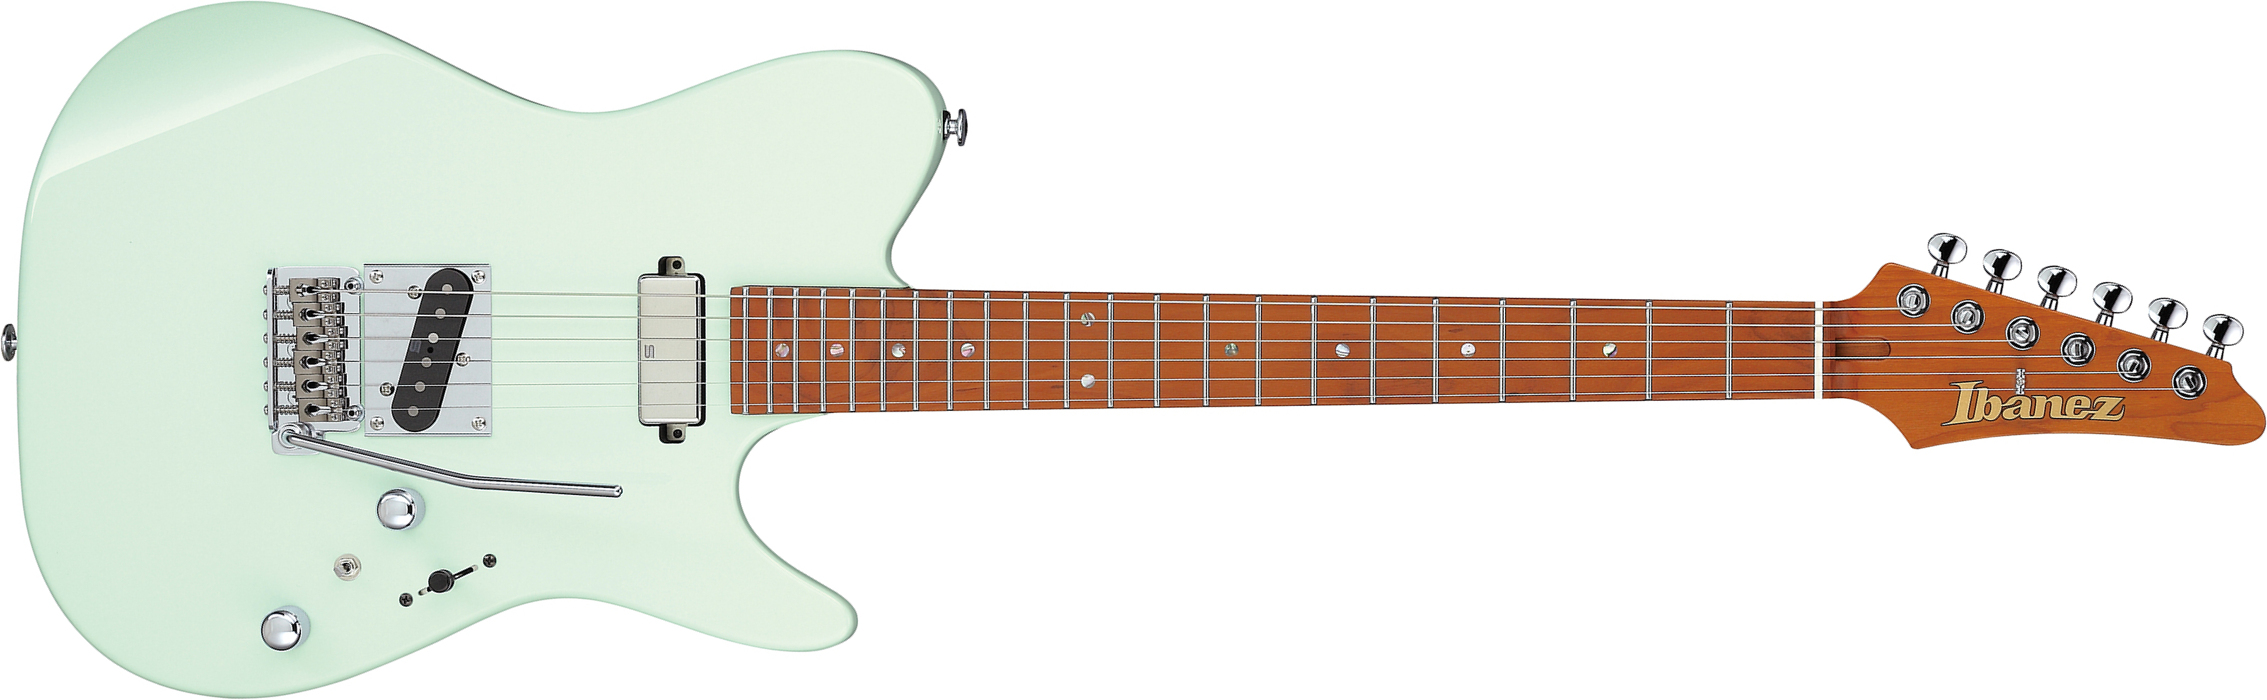 Ibanez Azs2200 Mgr Prestige Jap Smh Seymour Duncan Trem Mn - Mint Green - E-Gitarre in Teleform - Main picture